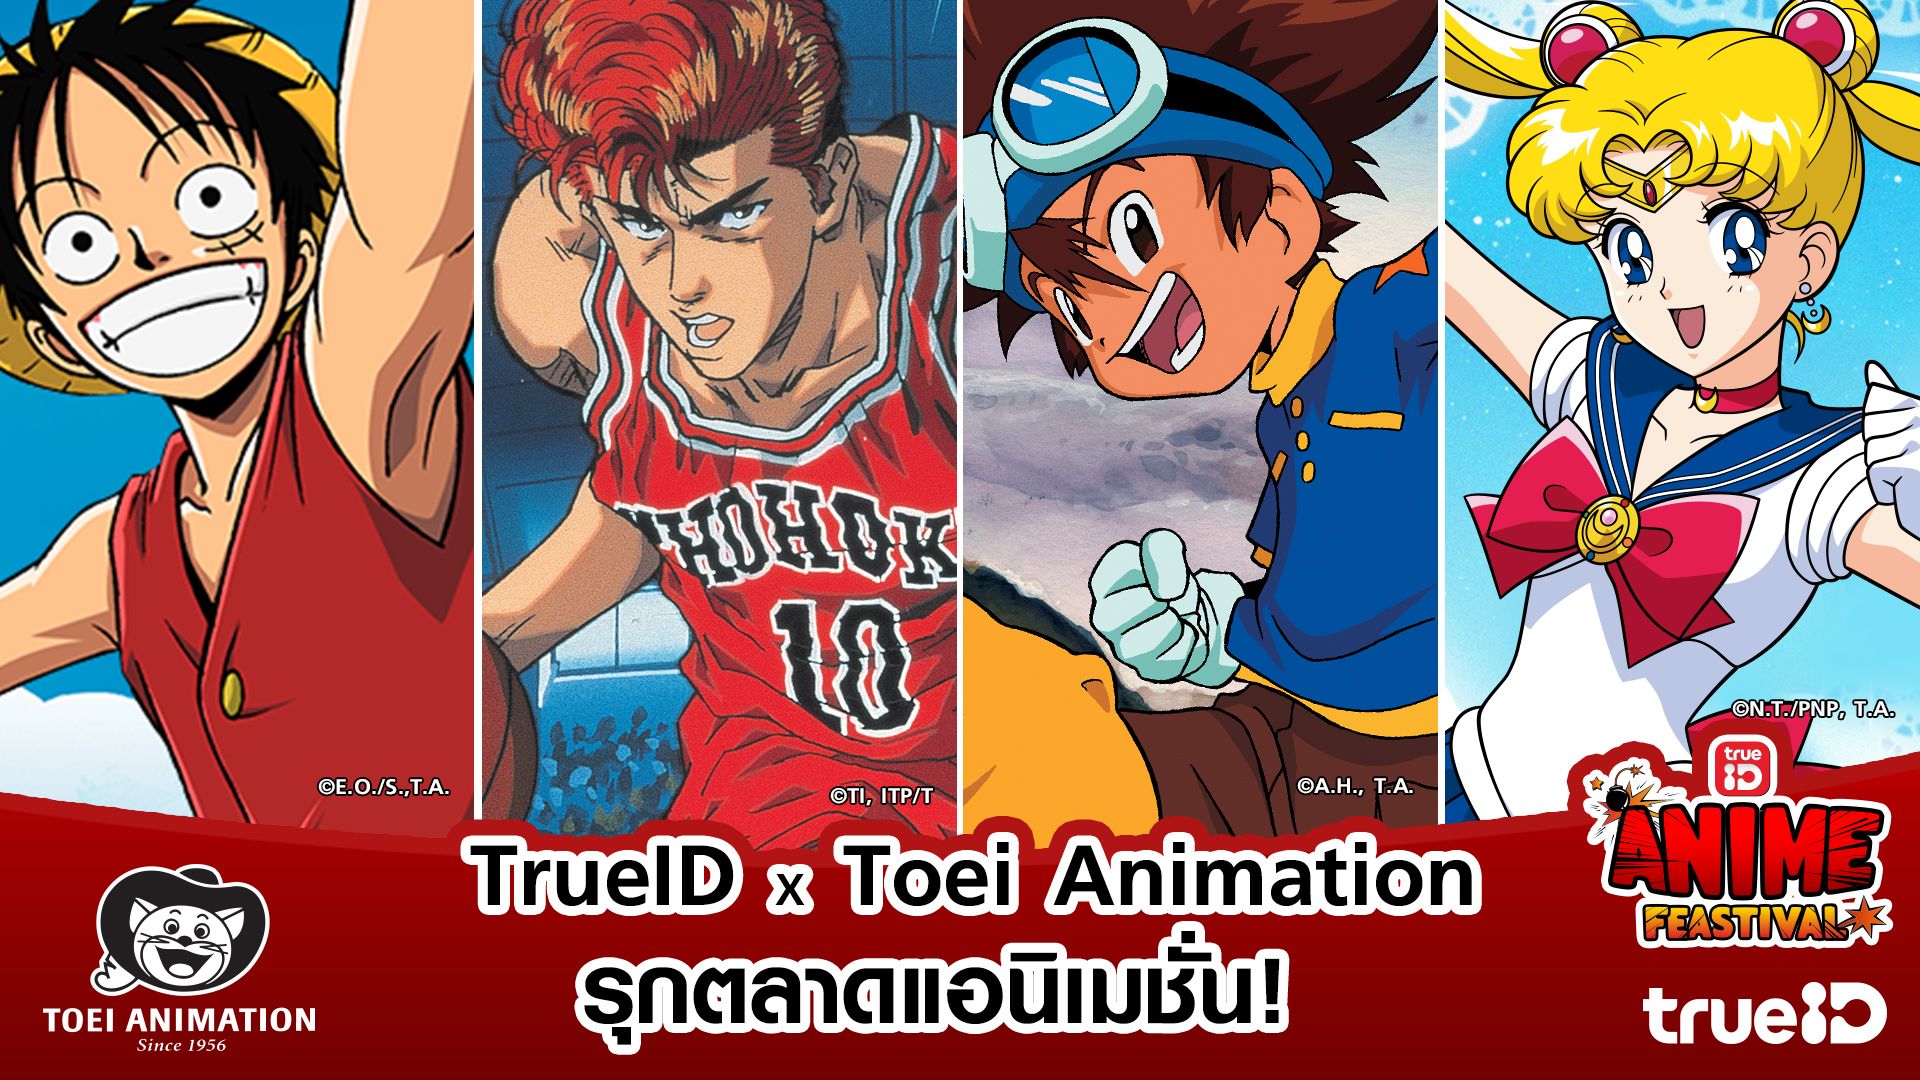 TrueID ������������� TOEI Animation ���������� One Piece, Slam Dunk ...